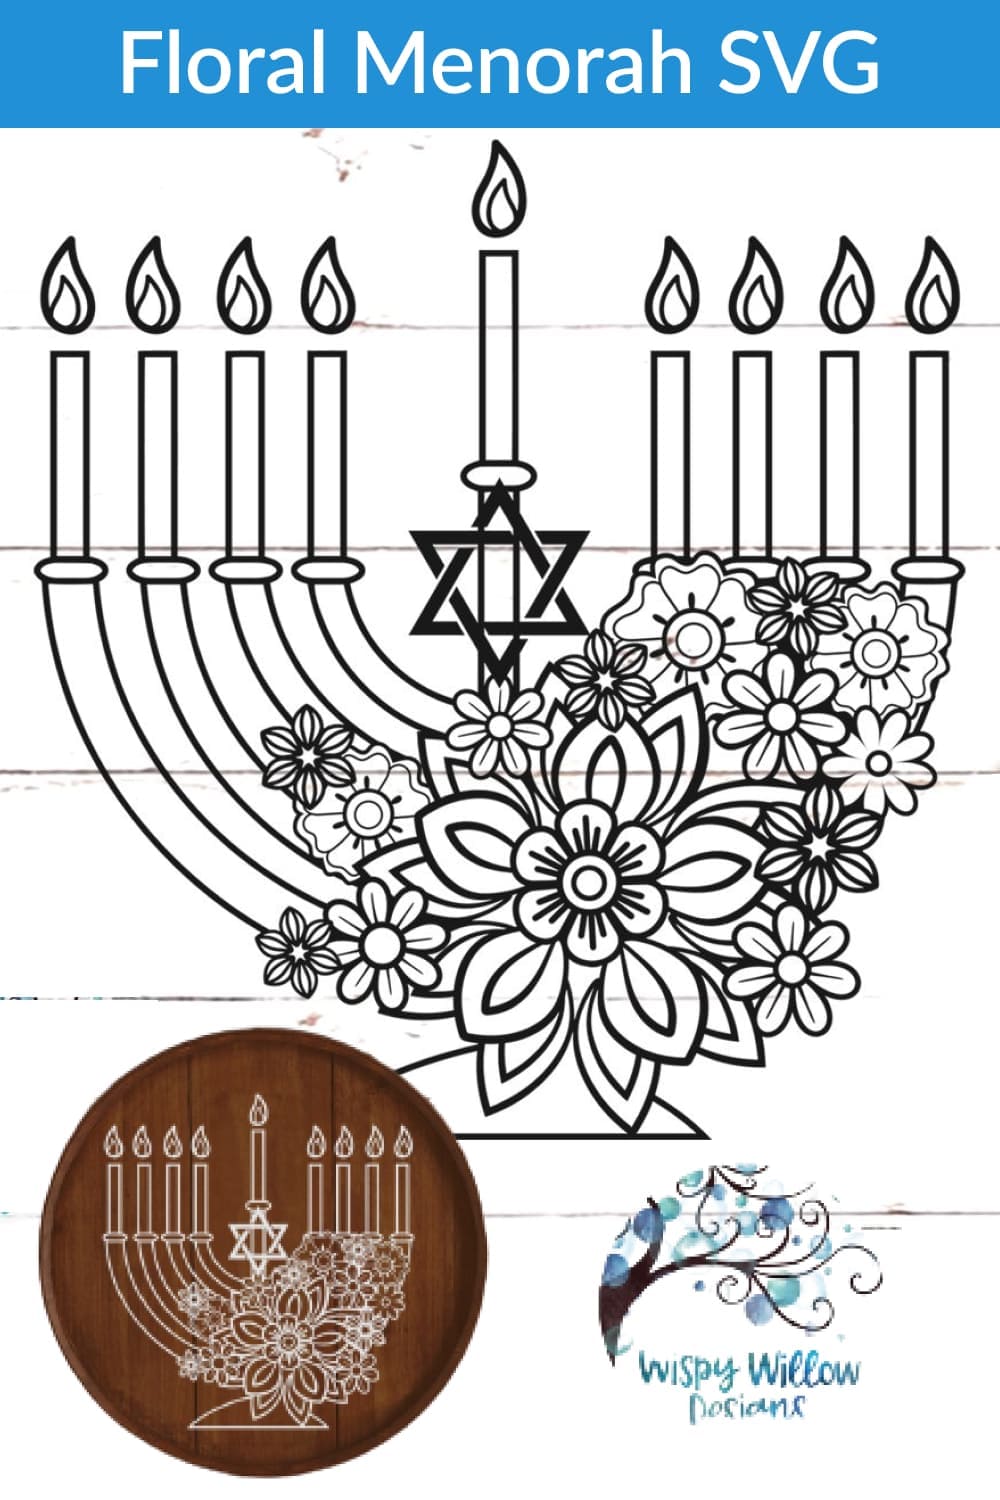 Floral Menorah SVG | Hanukkah Mandala SVG Cut File - Pinterest.